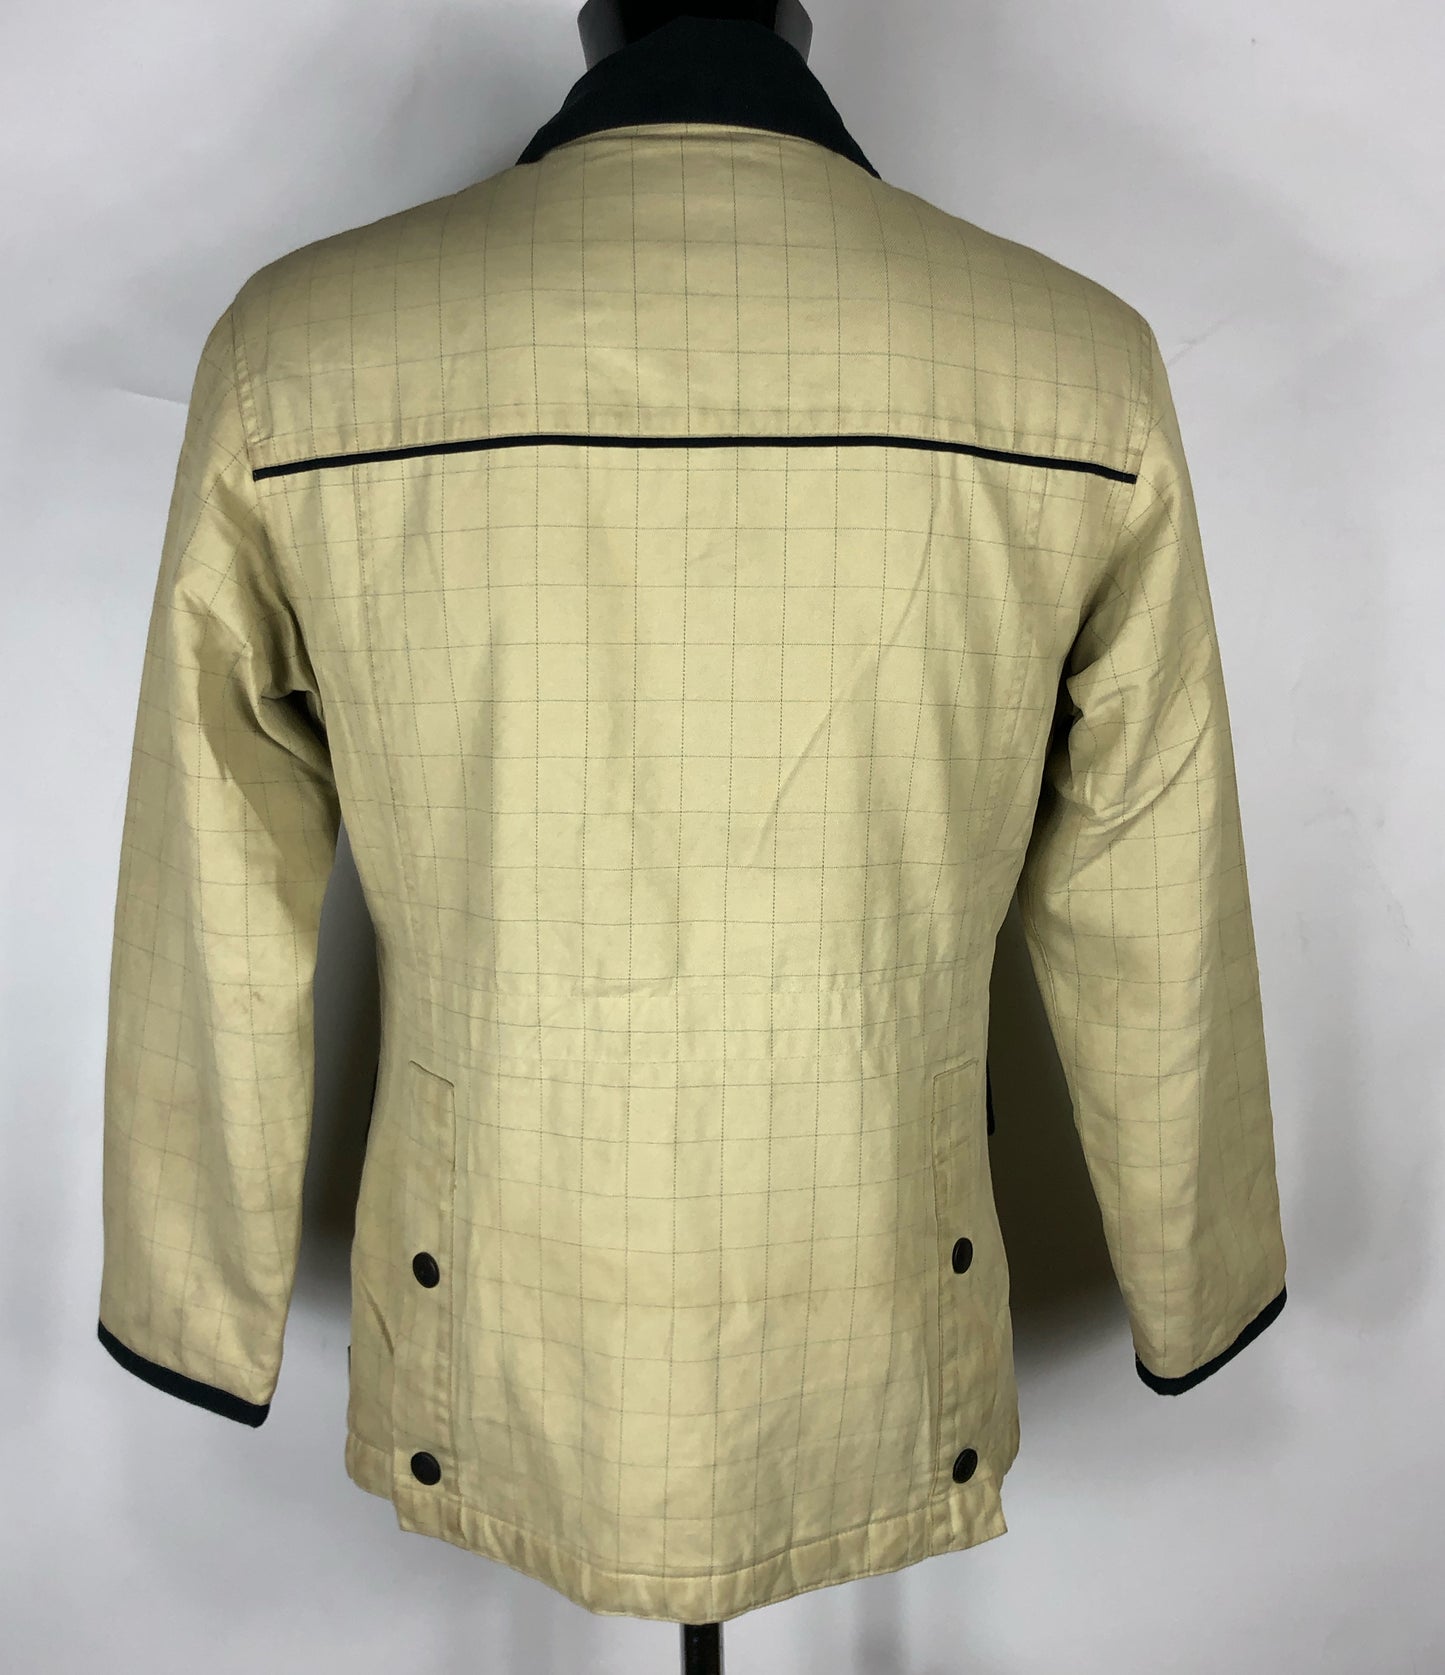 Barbour Giacca donna beige impermeabile Tg.38 Ladies Eventer Jacket Size UK8